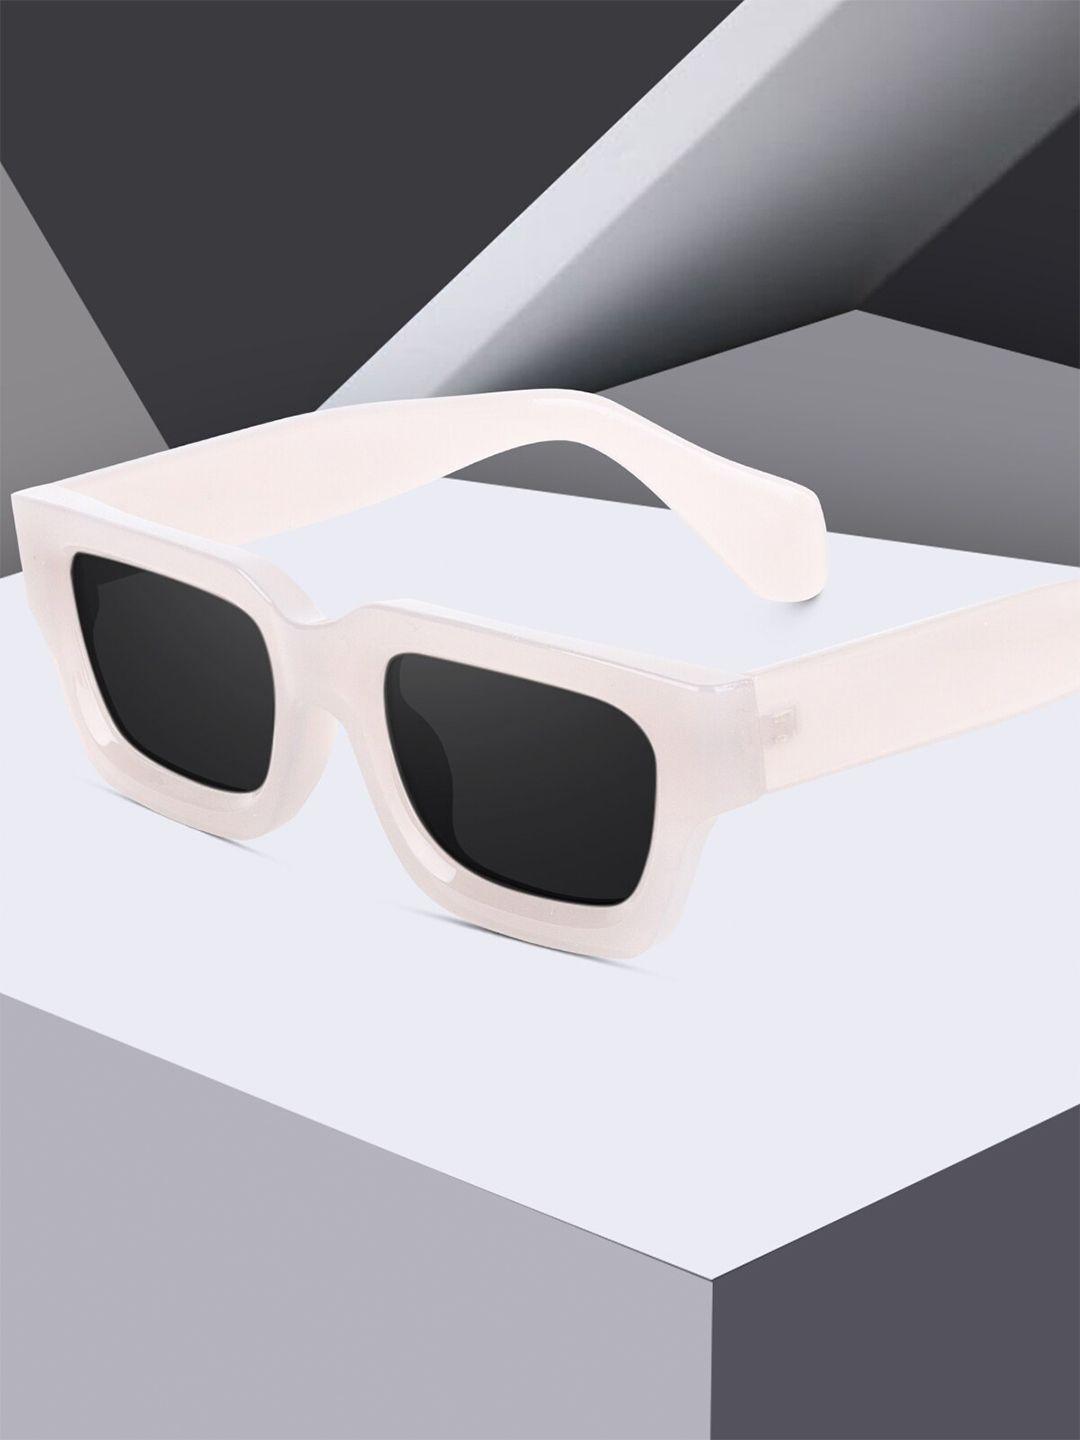 peter jones eyewear unisex black lens & white square sunglasses with uv protected lens